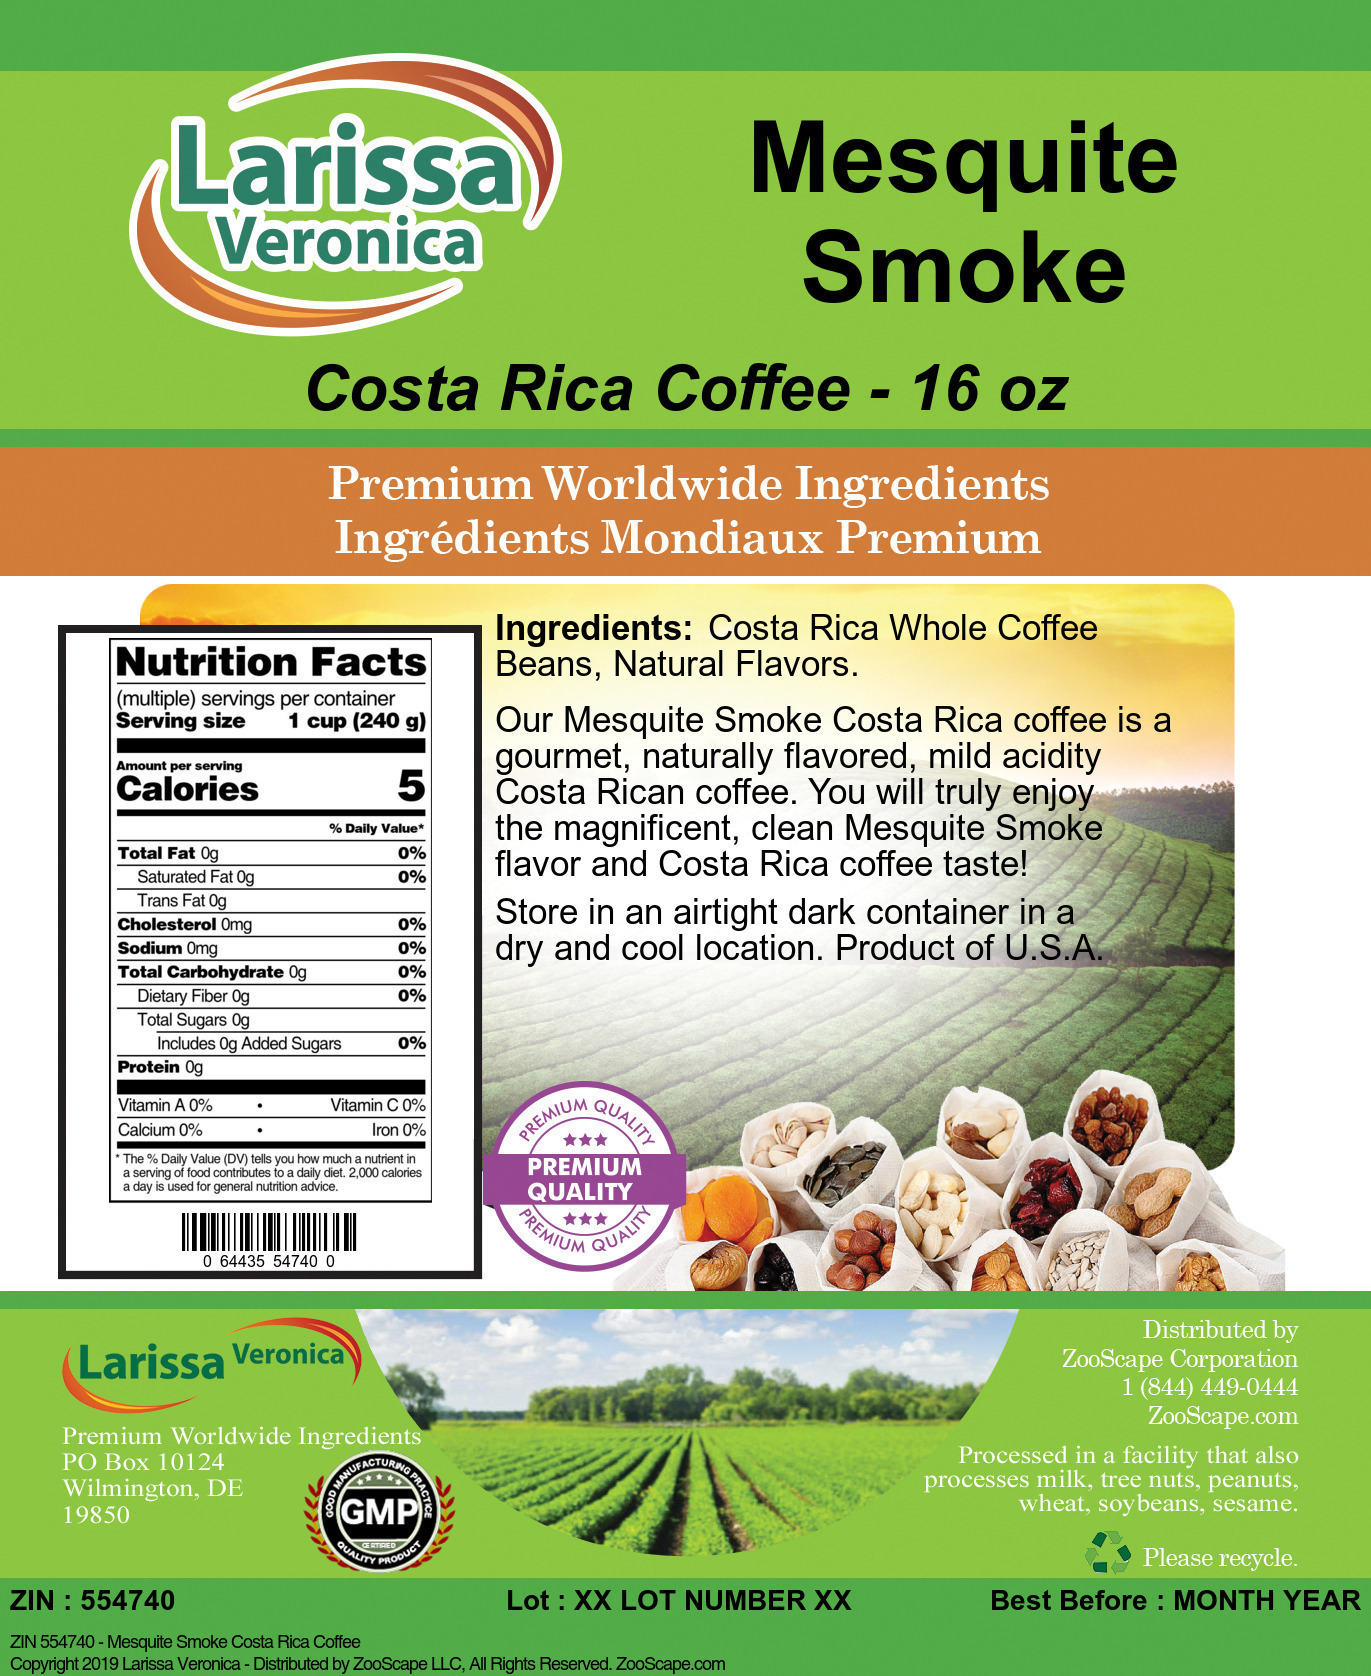 Mesquite Smoke Costa Rica Coffee - Label